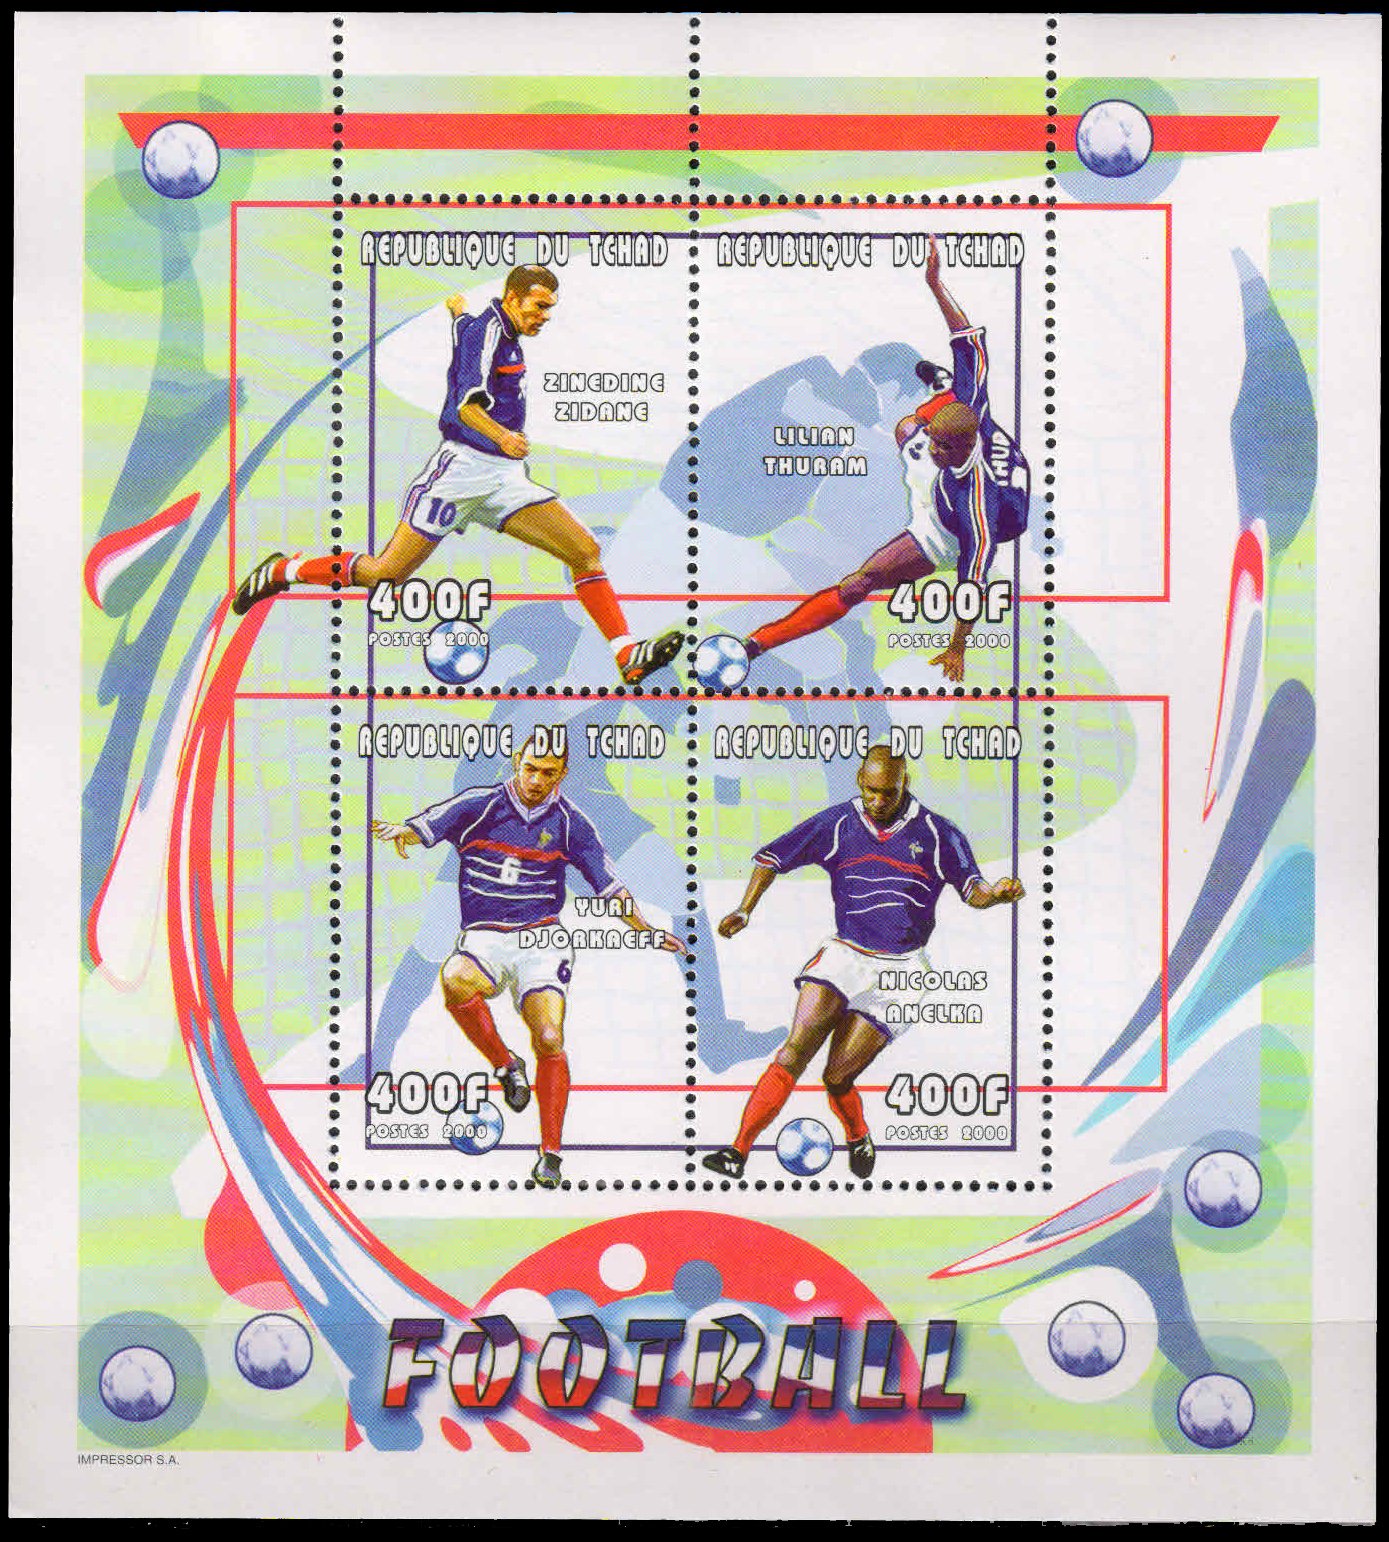 CHAD 2000-Football-Sports, Sheet of 4, MNH